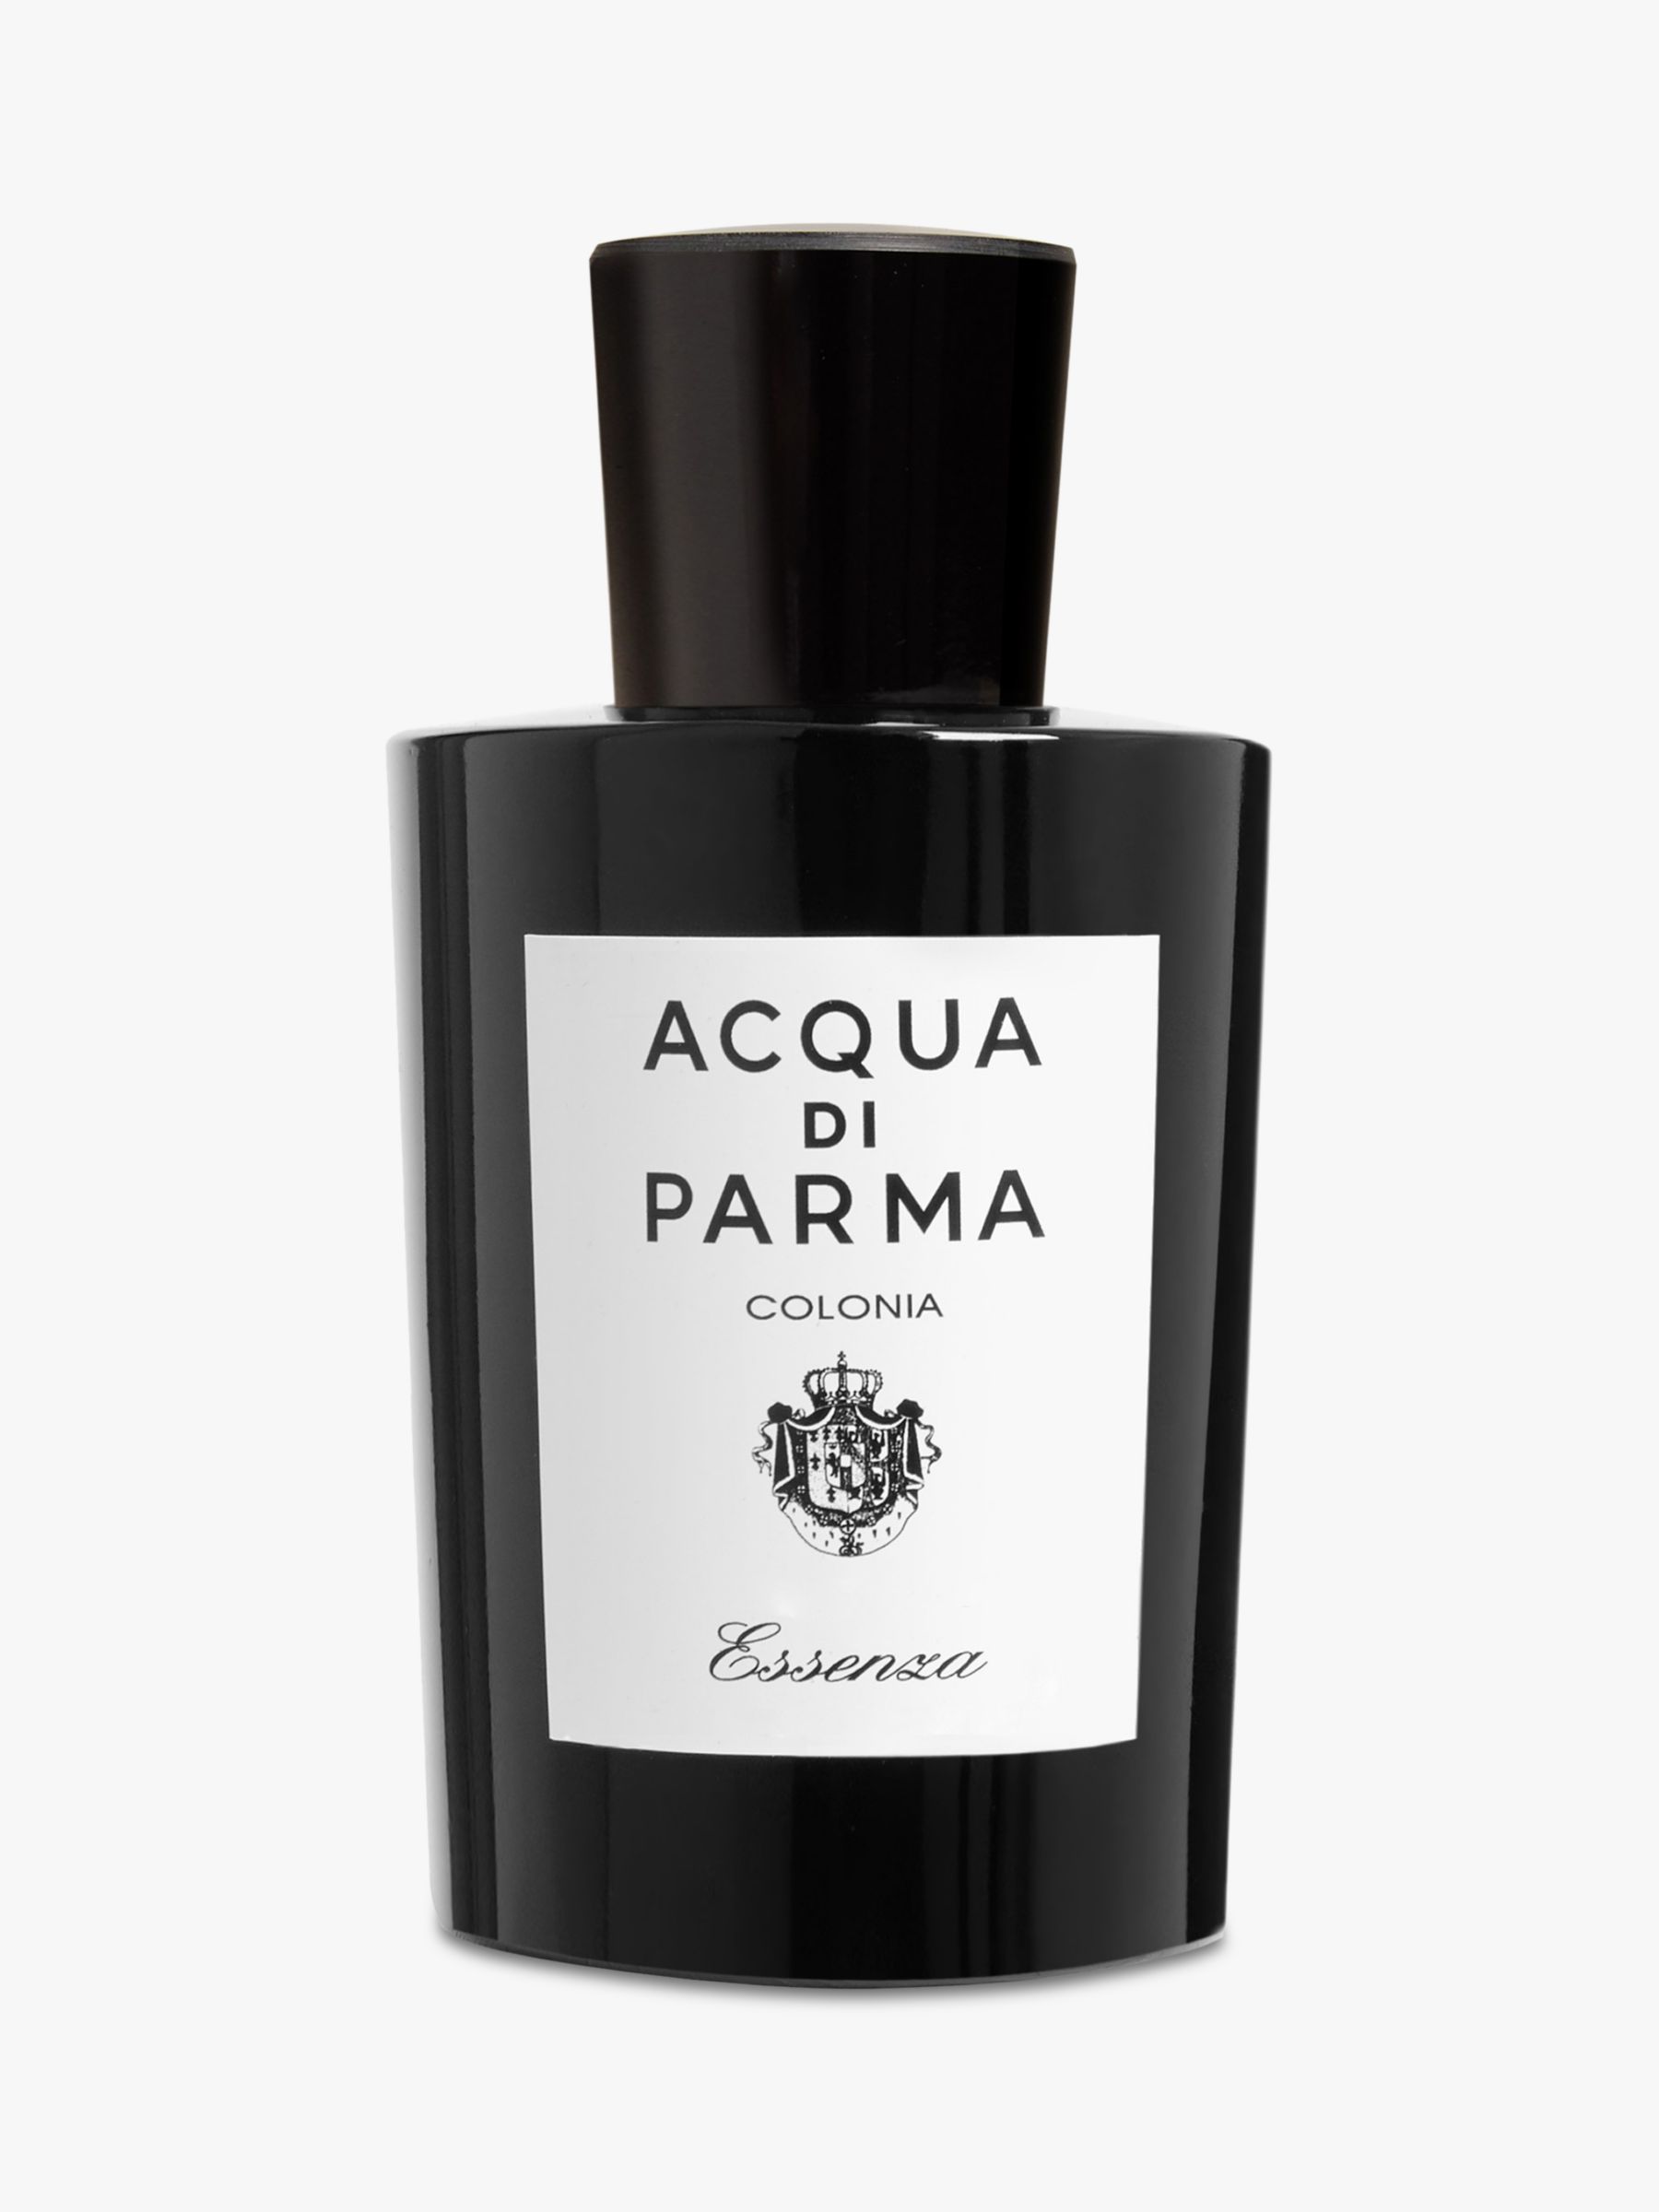 Acqua Di Parma Colonia Essenza Eau De Cologne 50ml Spray